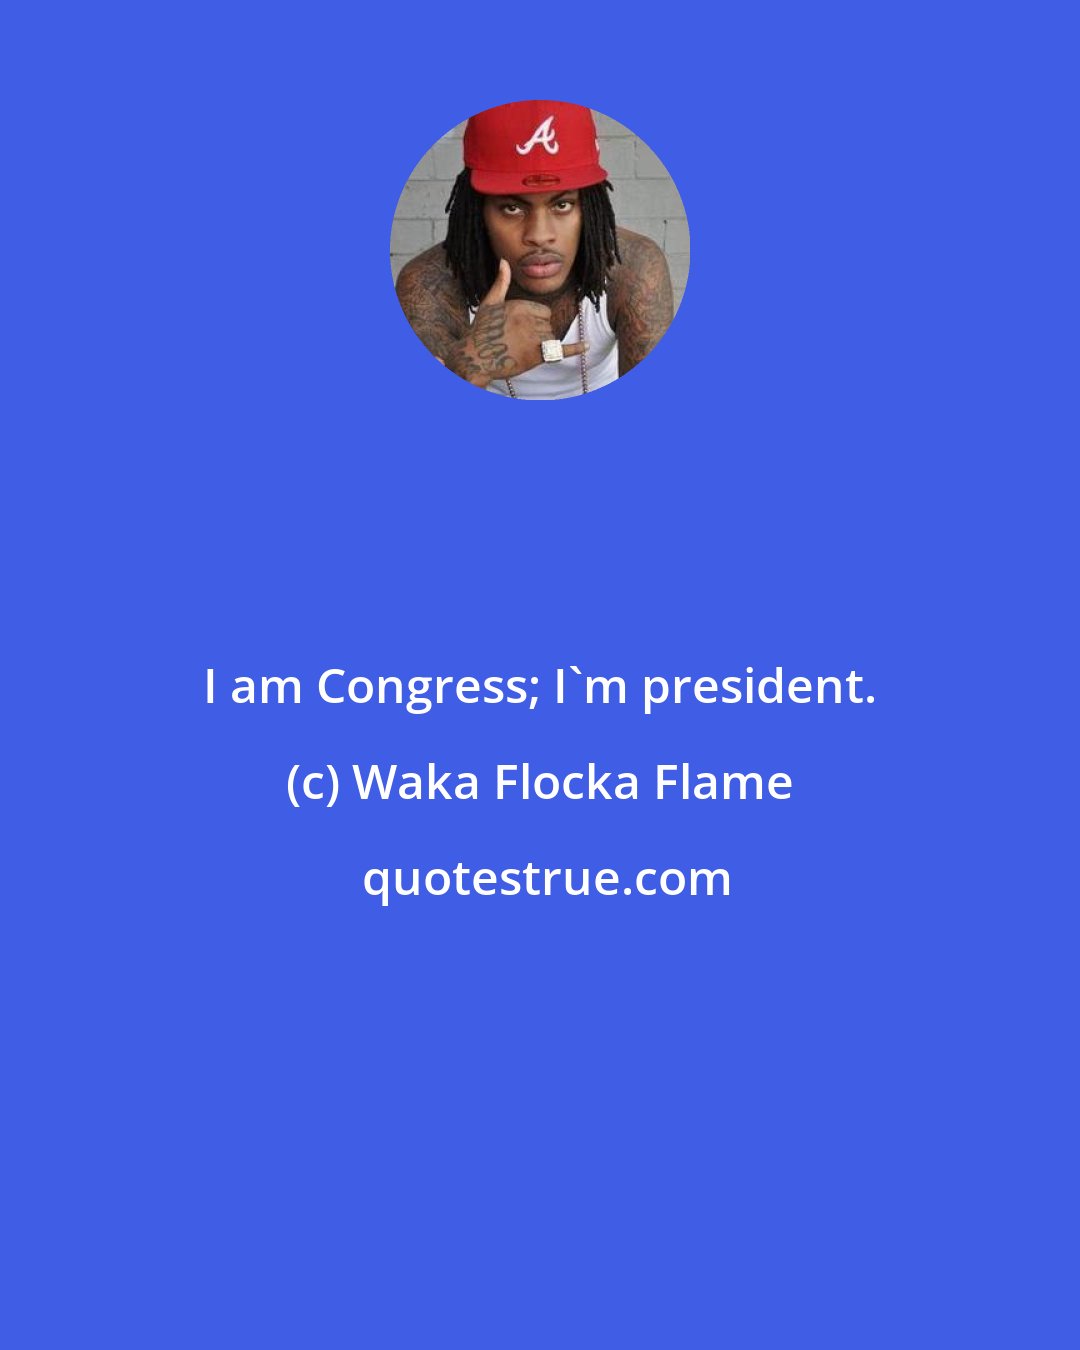 Waka Flocka Flame: I am Congress; I'm president.